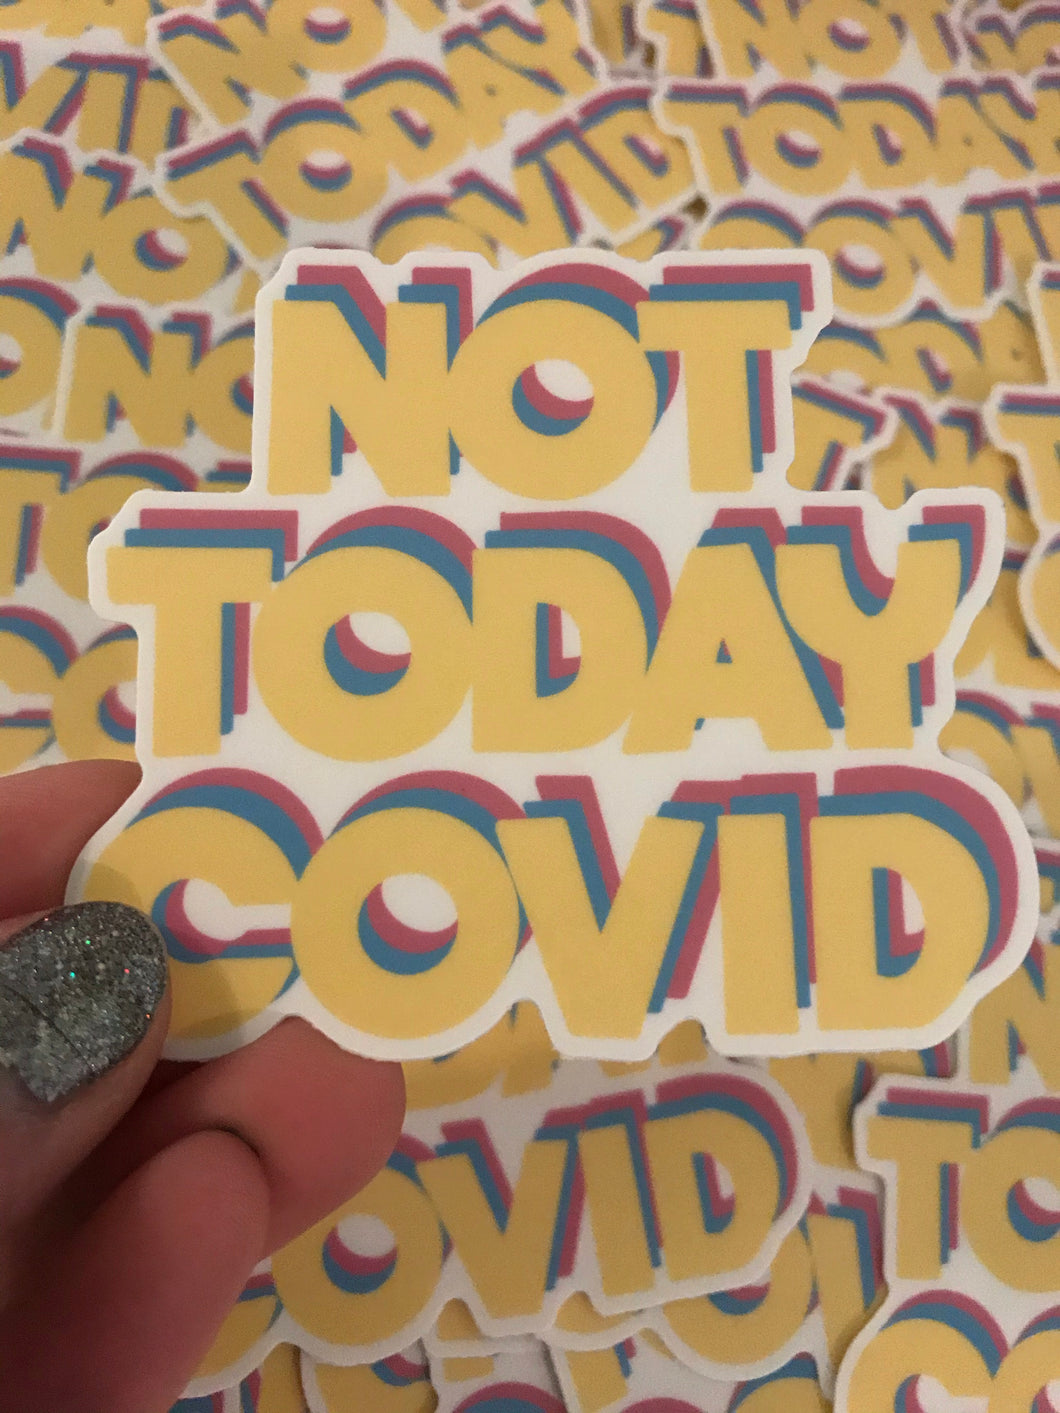 Vinyl Sticker - Not today Covid 3”